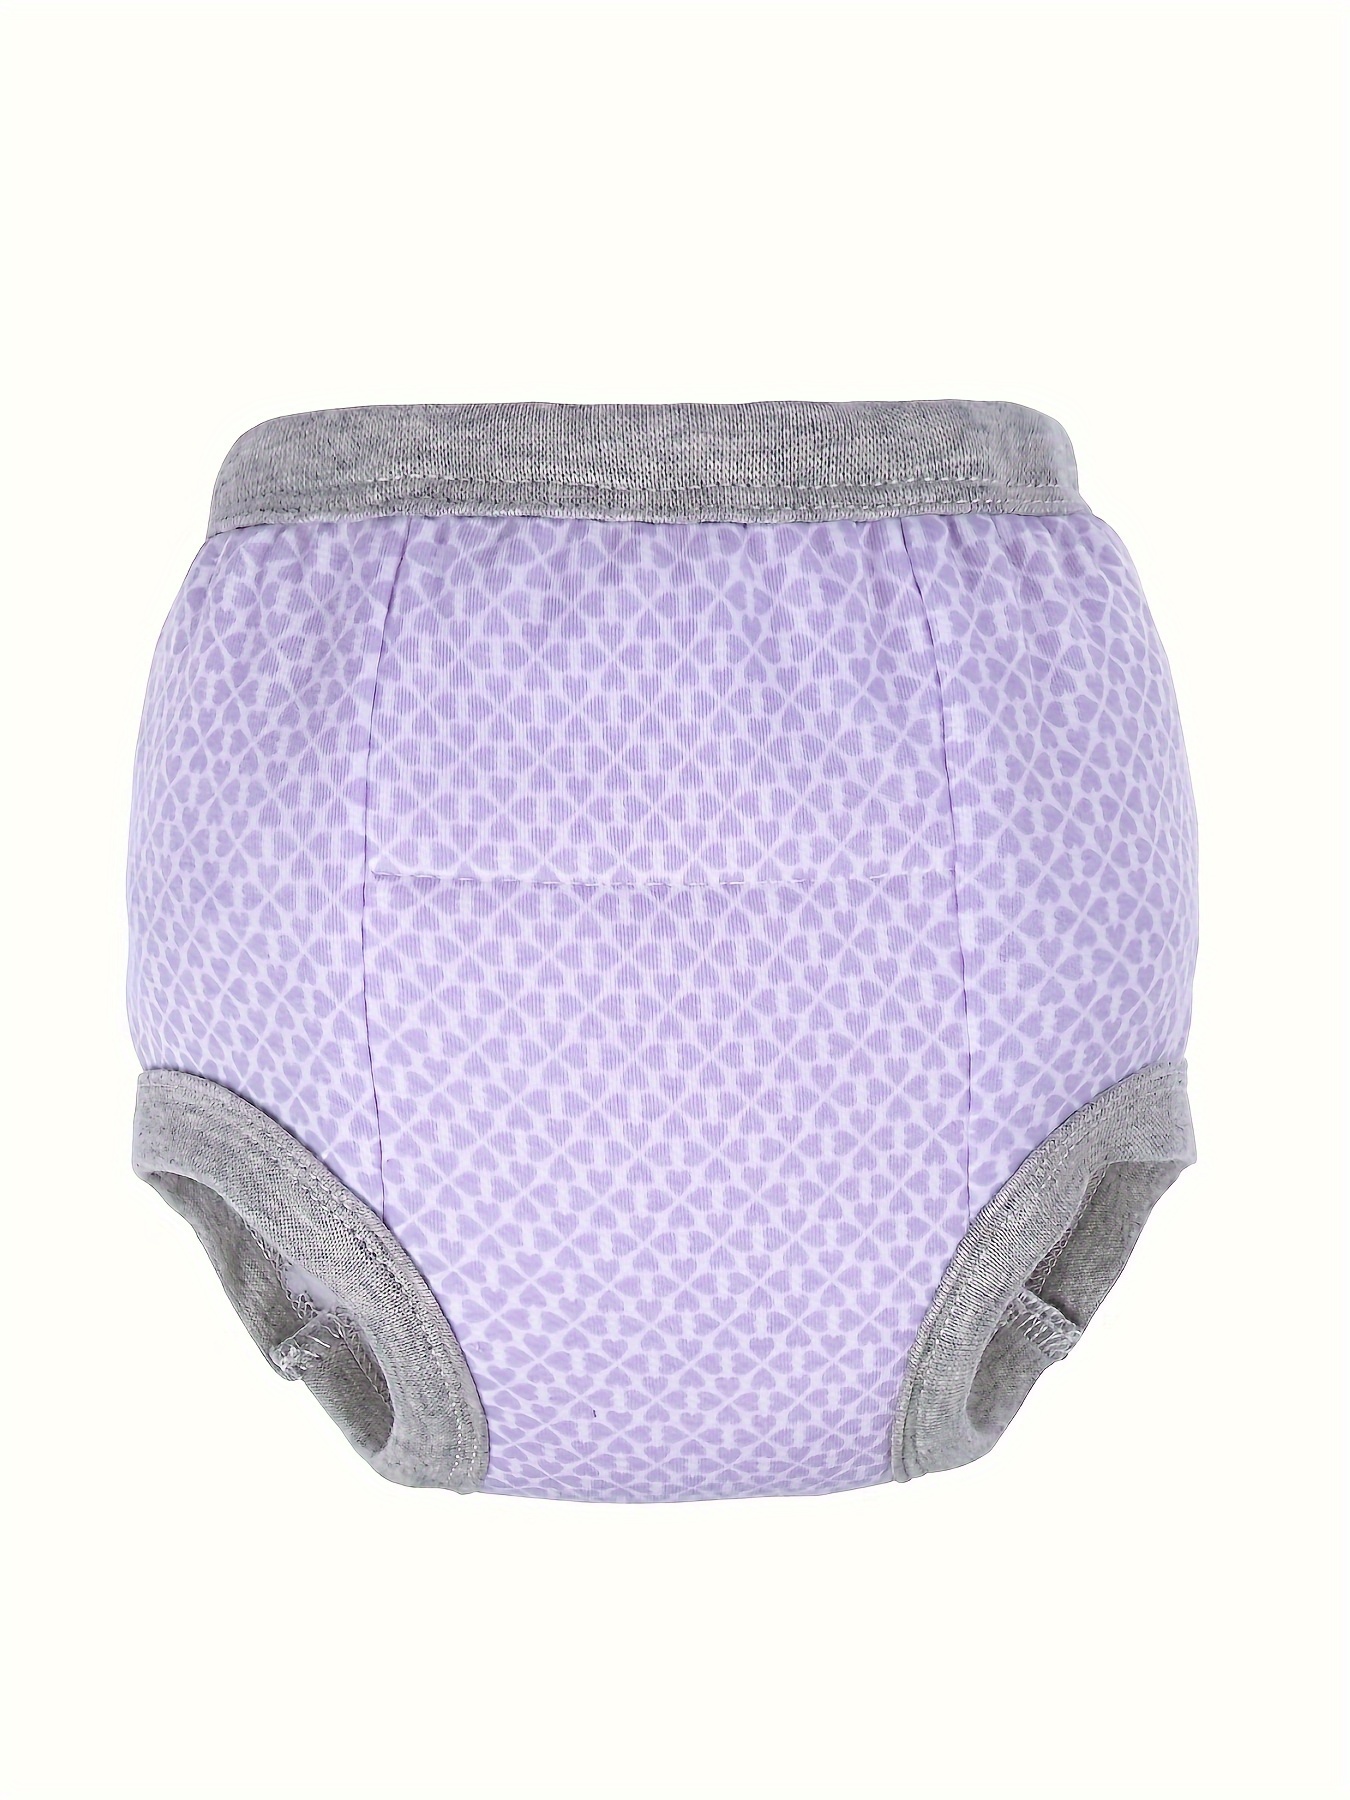 Baby Girls Cotton Diaper Pants Girls Training Pants Washable